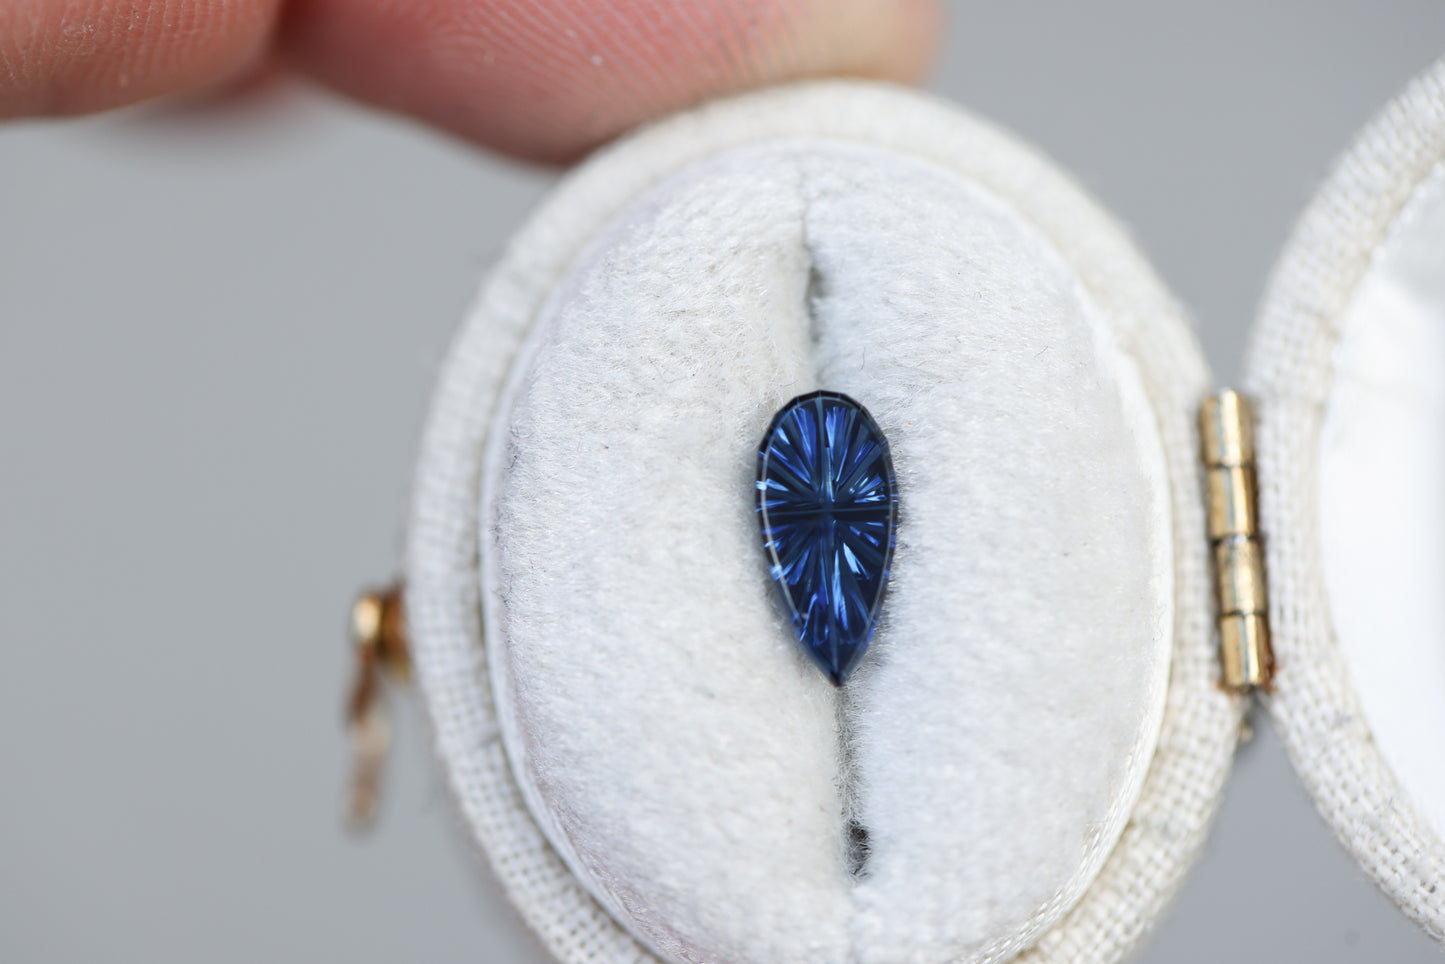 .78ct pear blue sapphire - Starbrite cut by John Dyer